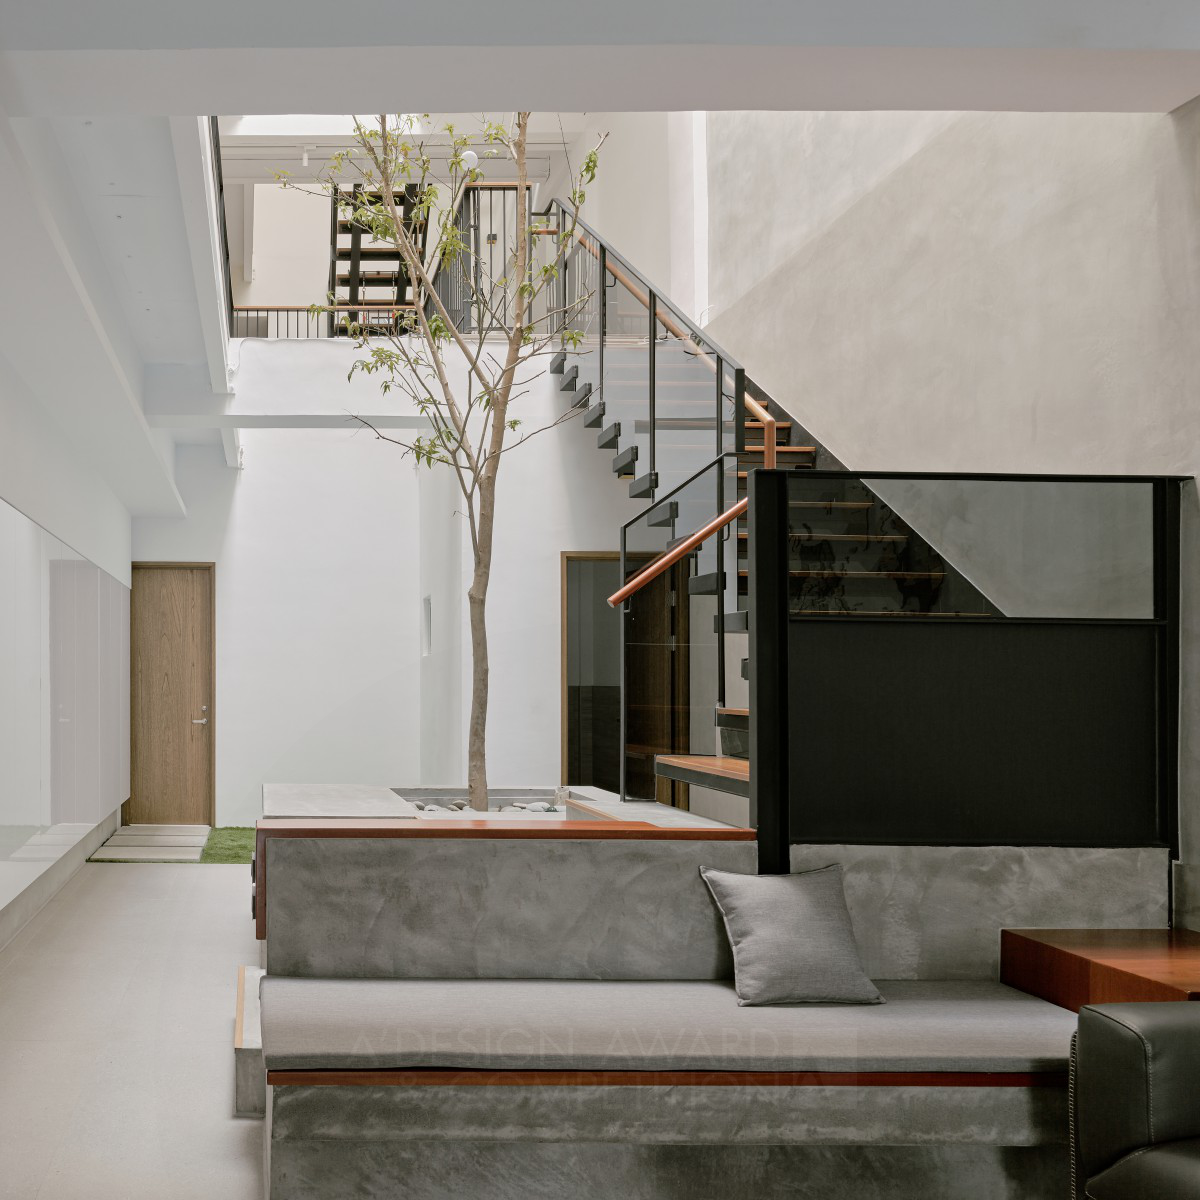 House of Light Well Residence by Chun Yen Chen